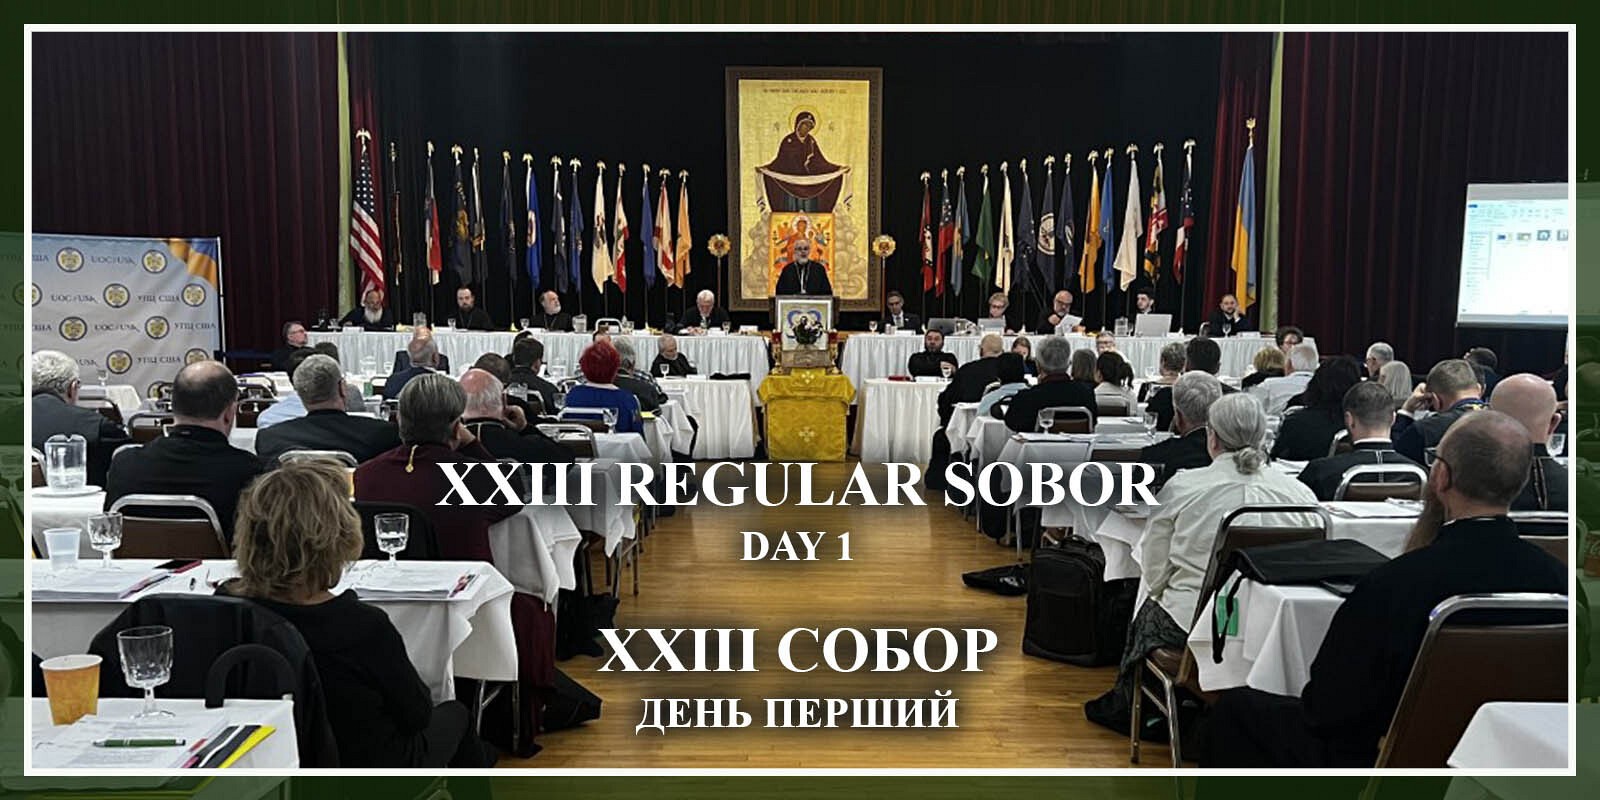 Sobor - Day One - Перший день Собору